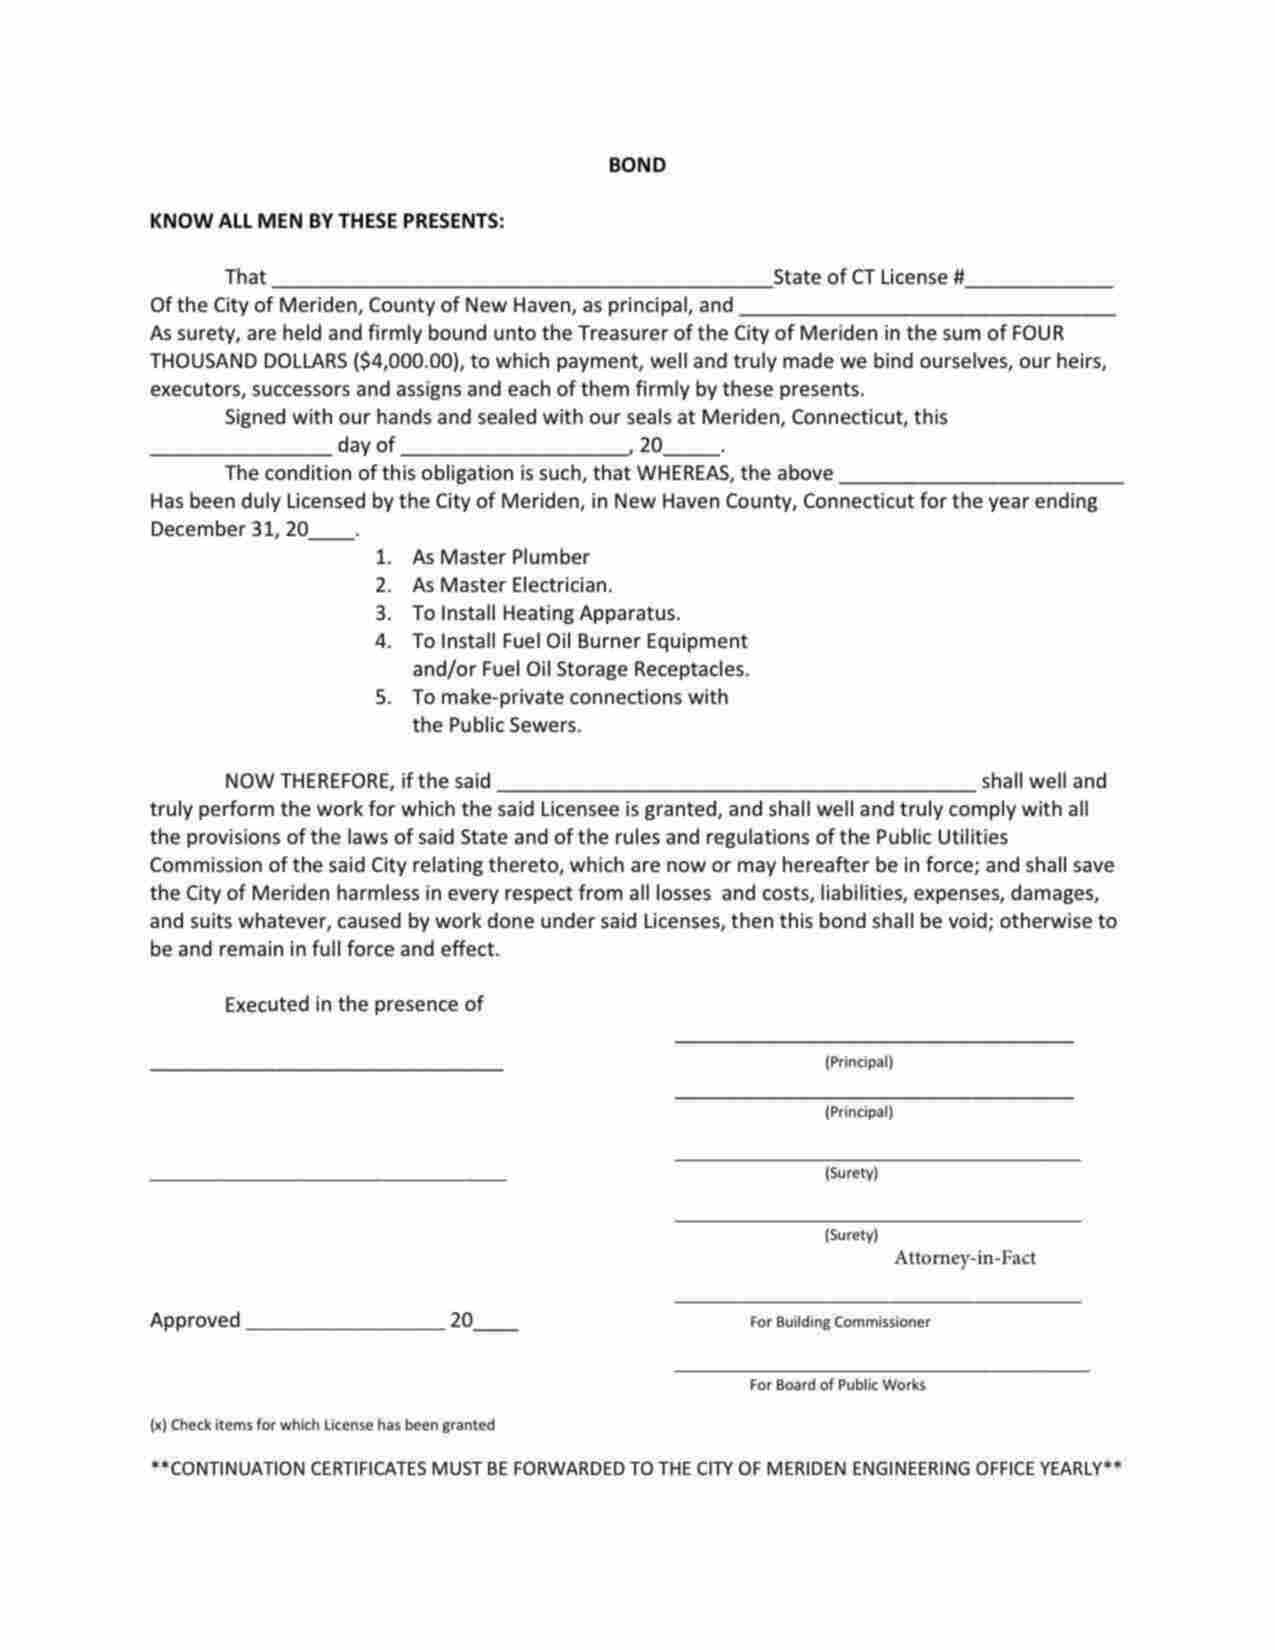 Connecticut Contractor's License/Permit Bond Form